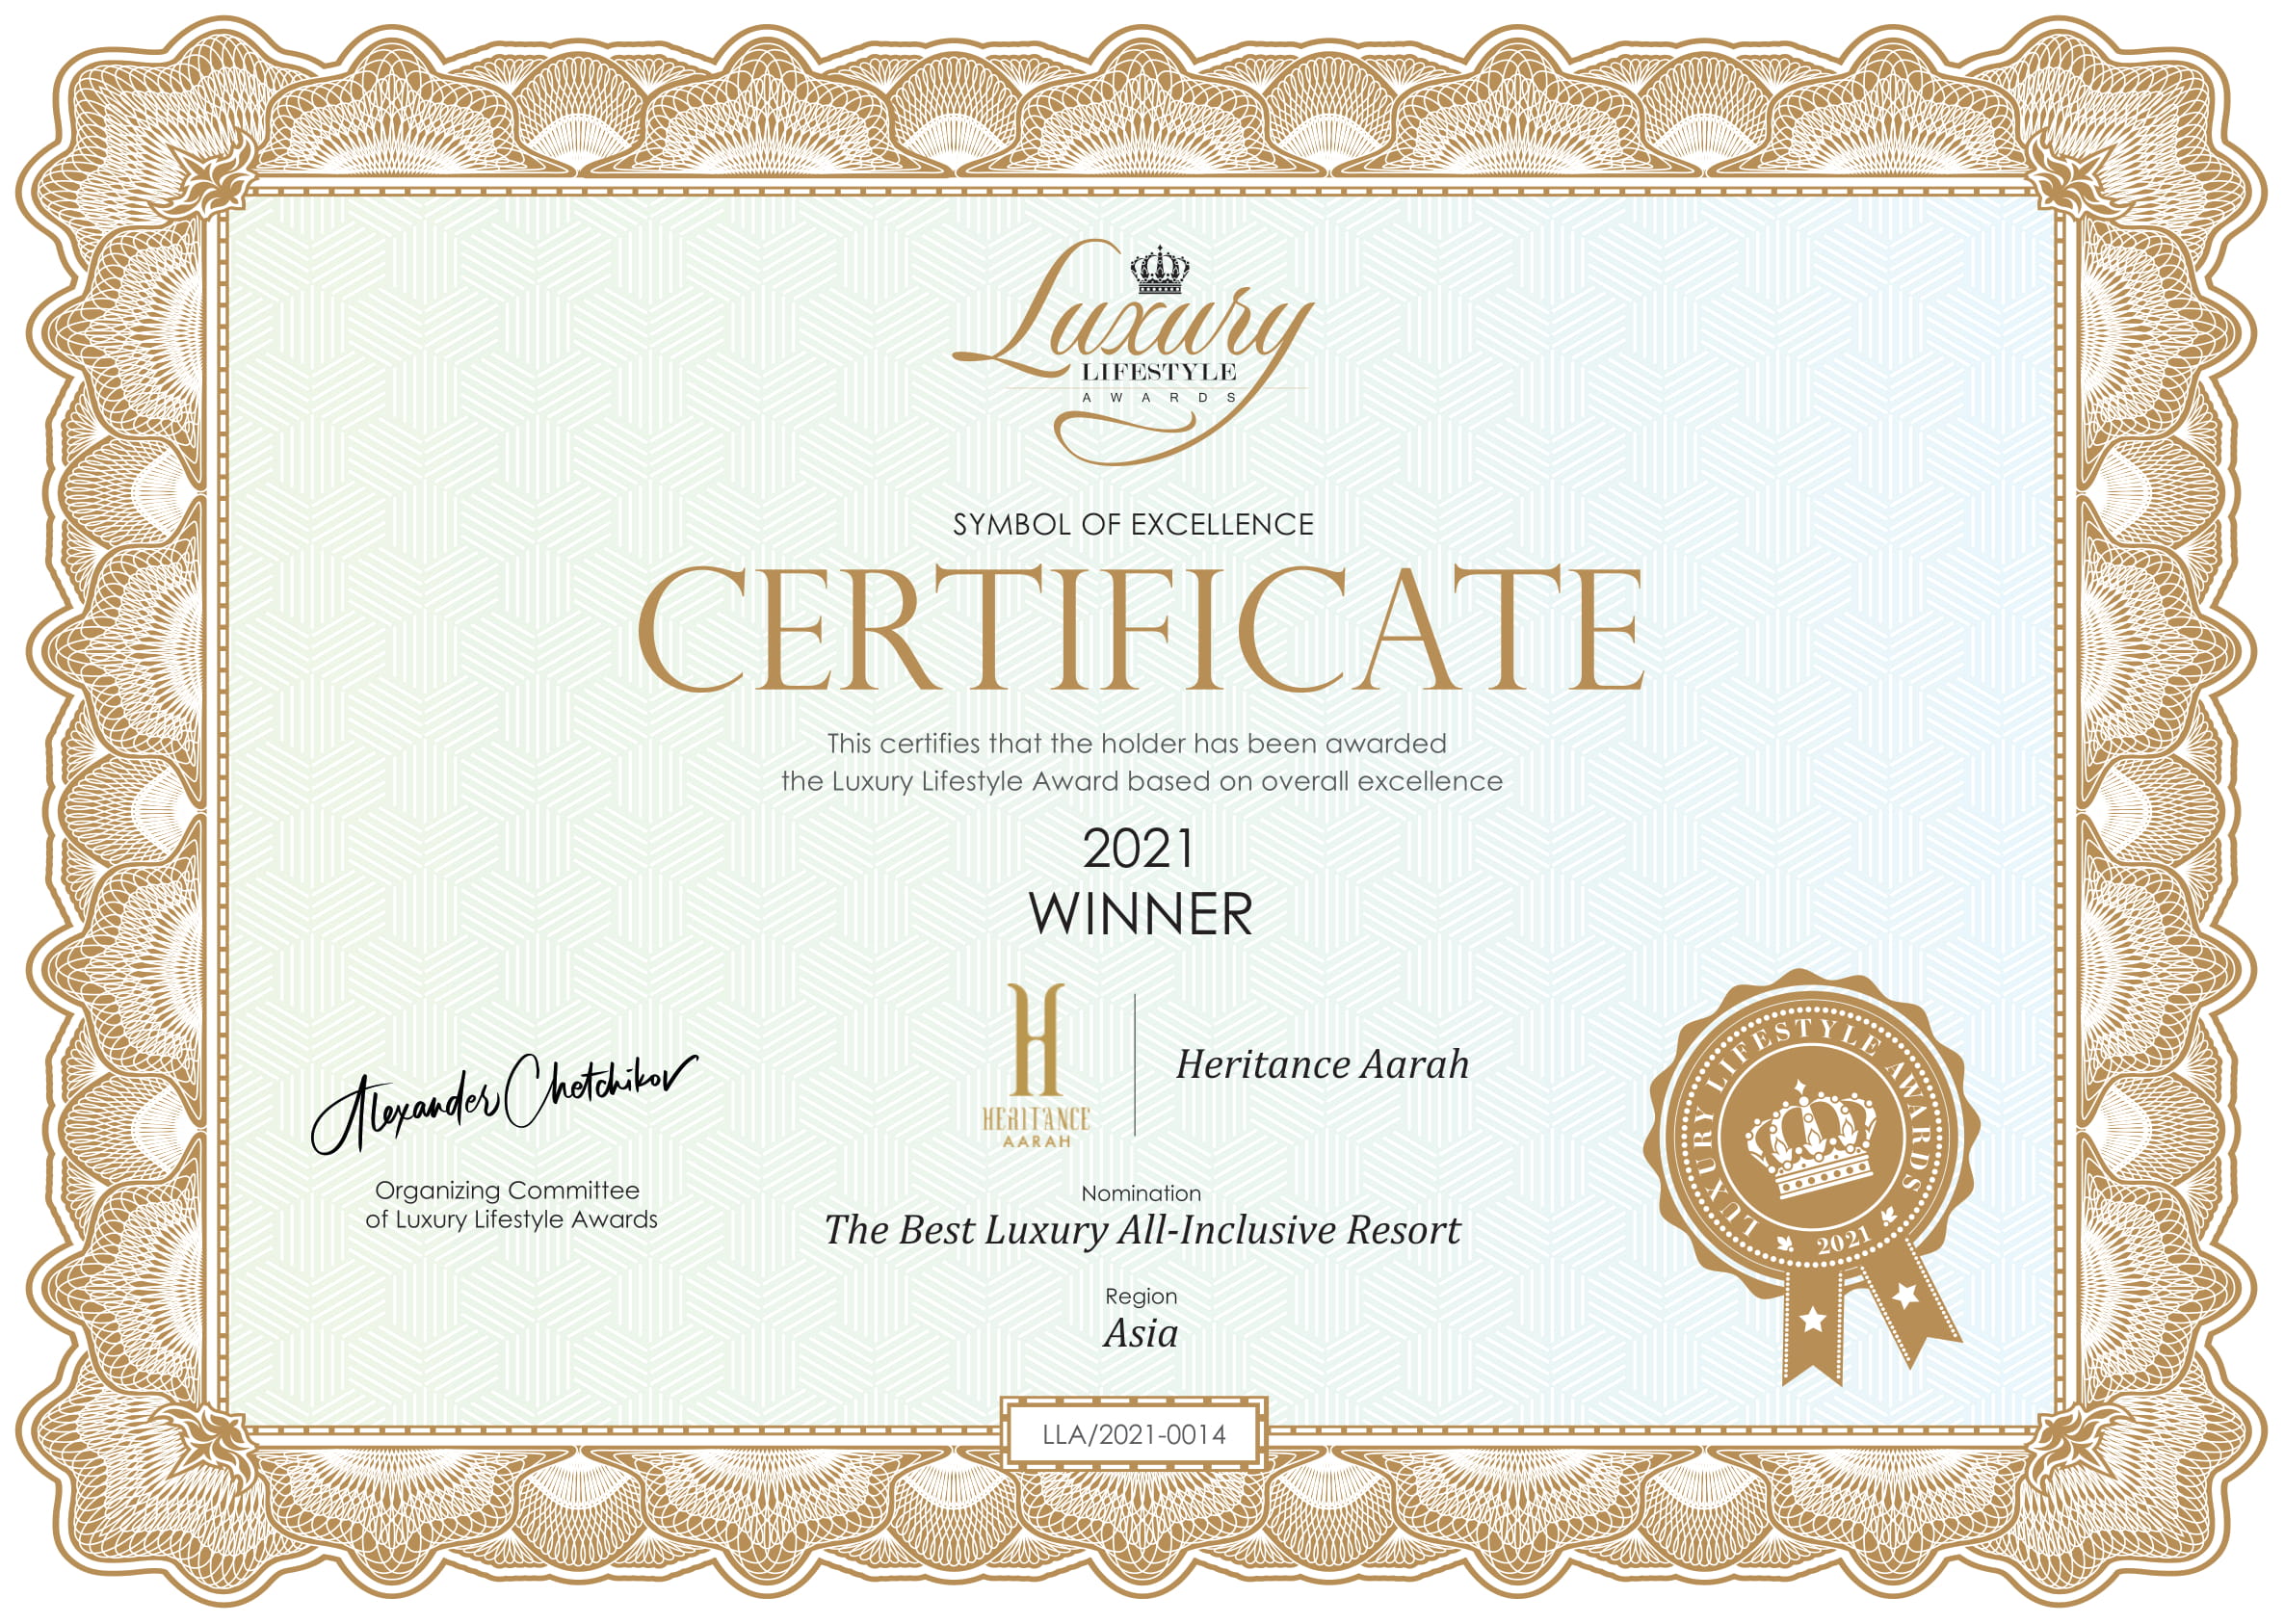 Luxury Lifestyle Award Winner Certificate Of Heritance Aarah Maldives 